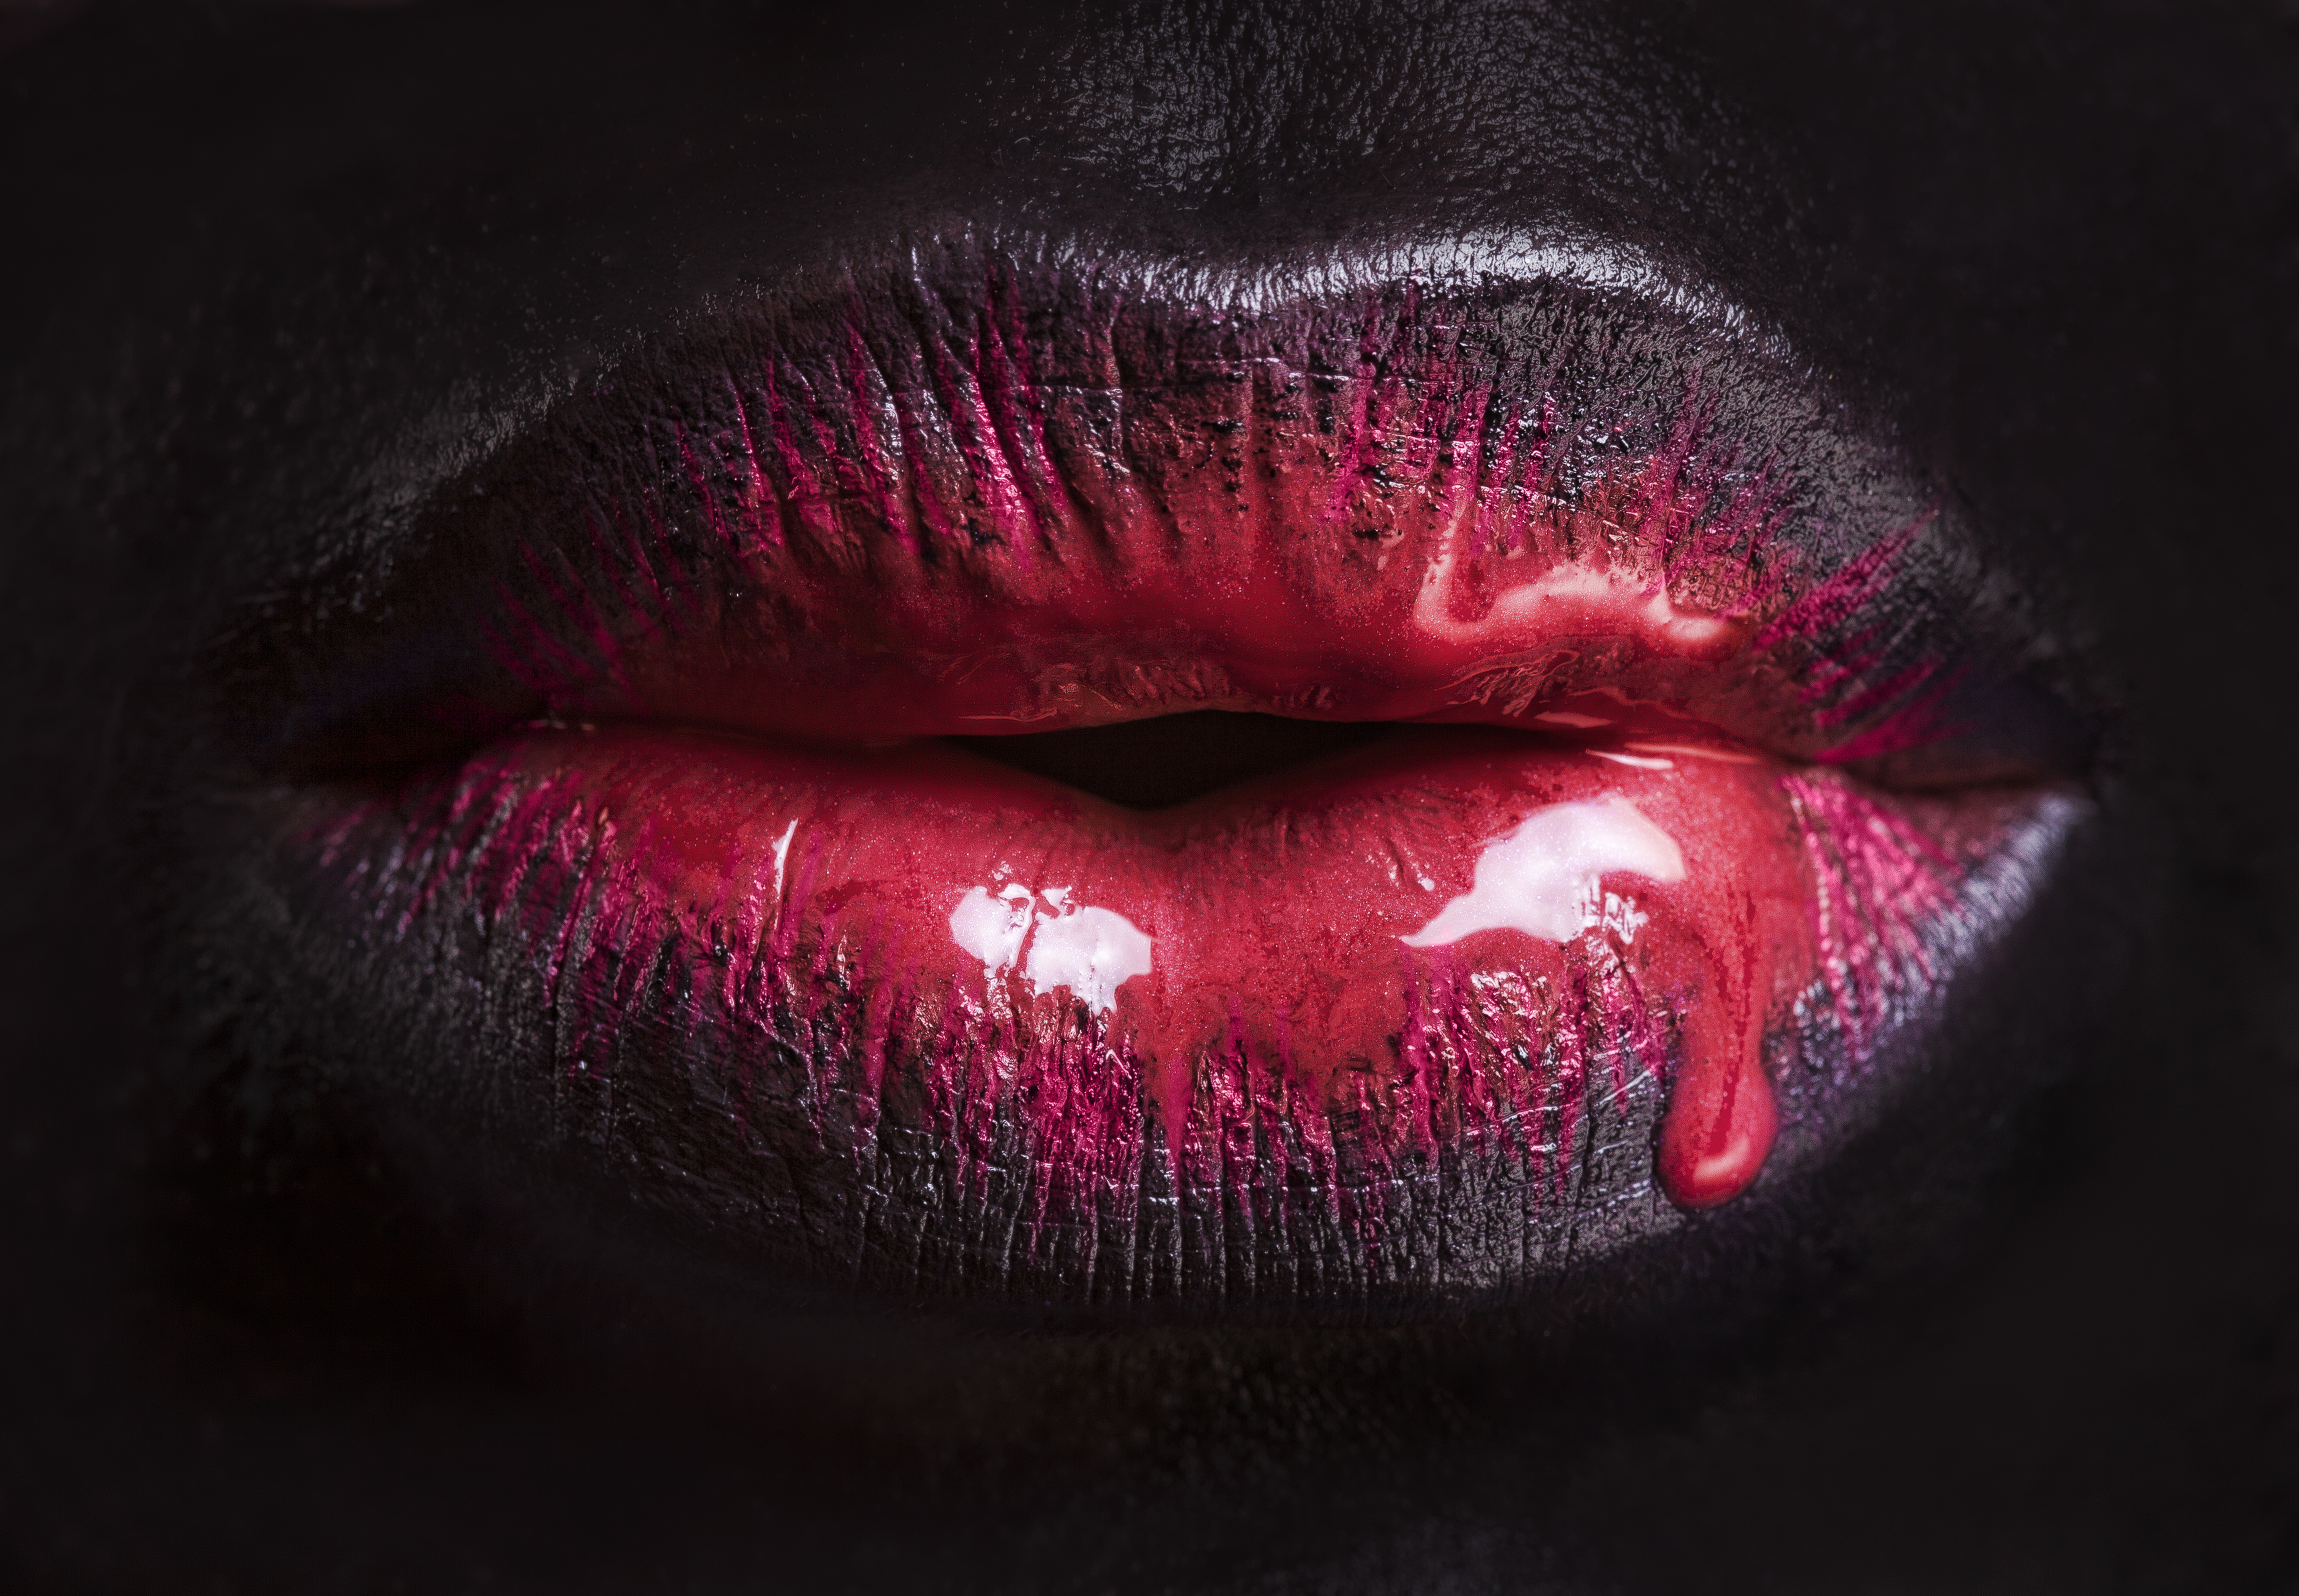 Картина Rose Lips